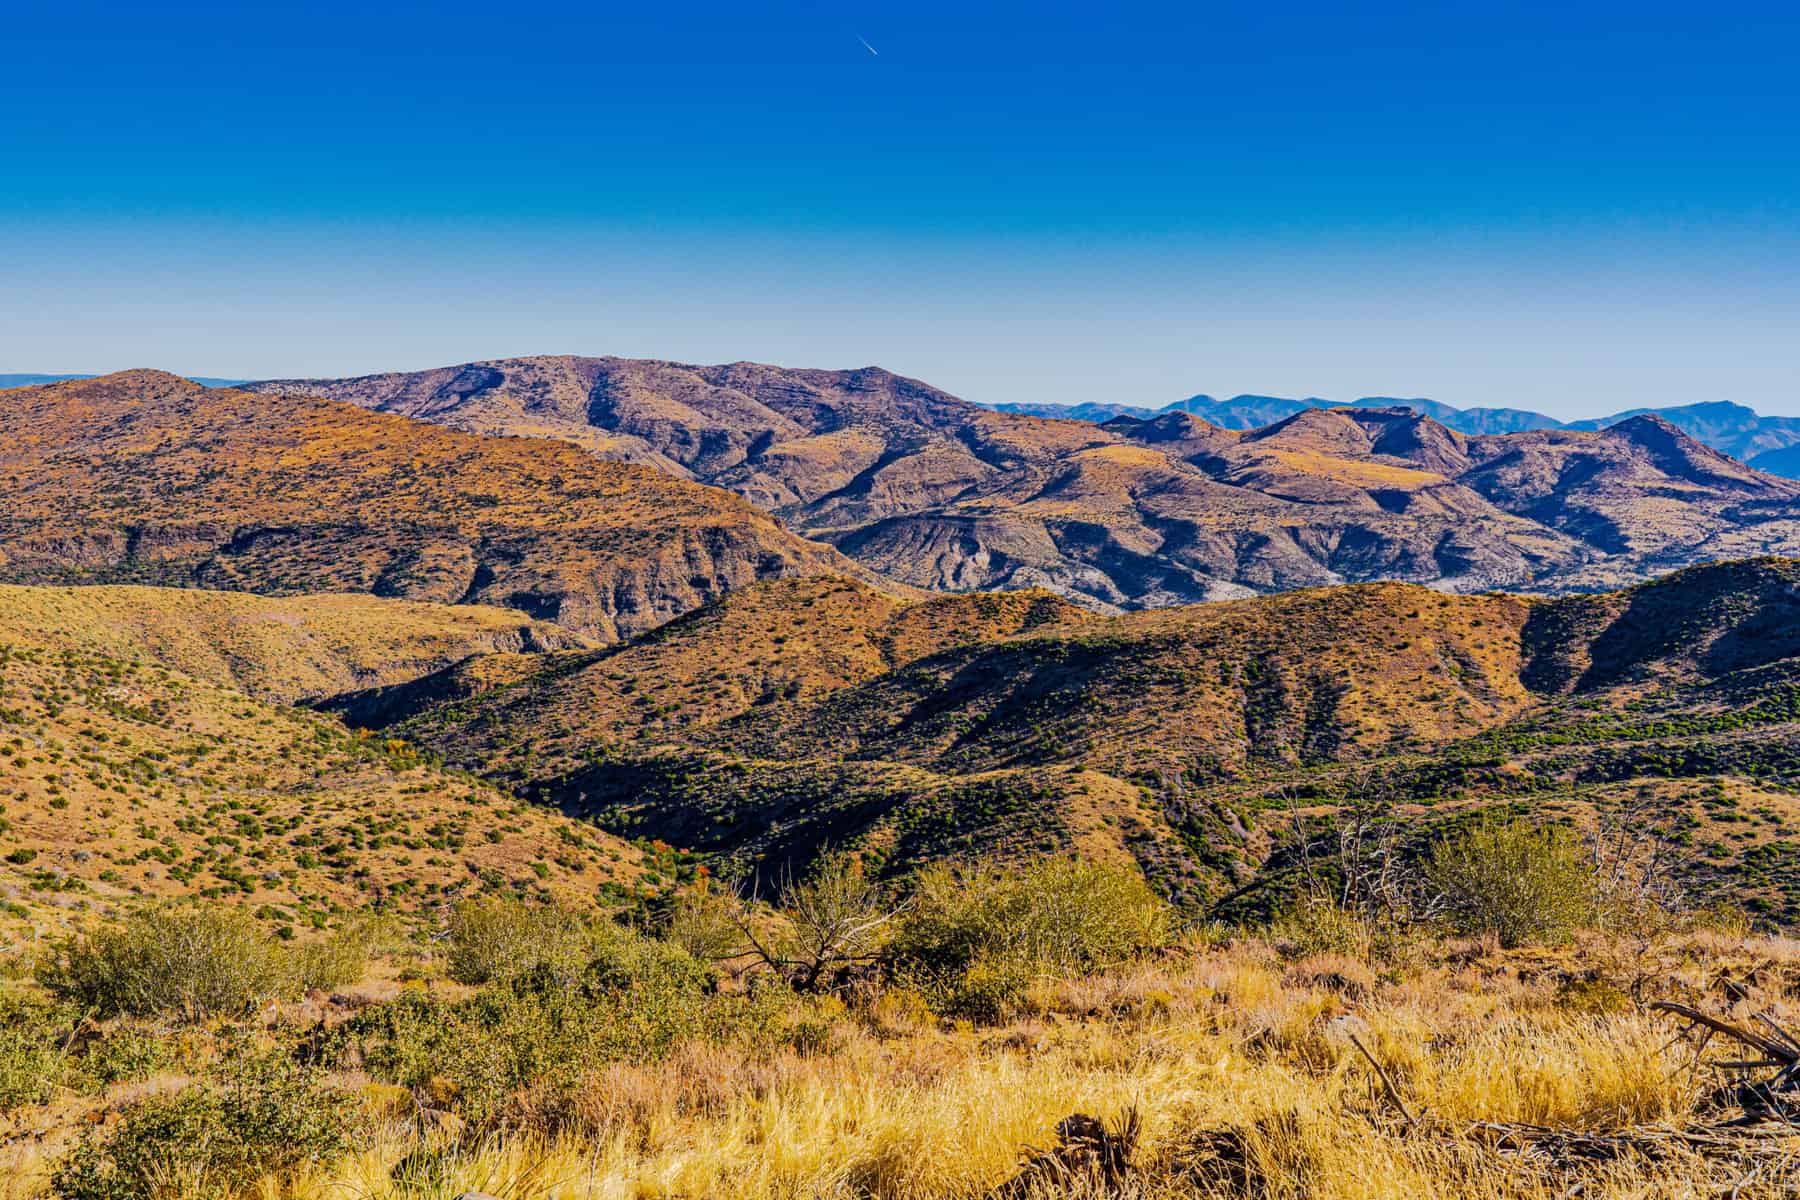 A beautiful shot of the high desert landscape in the Arizona wilderness